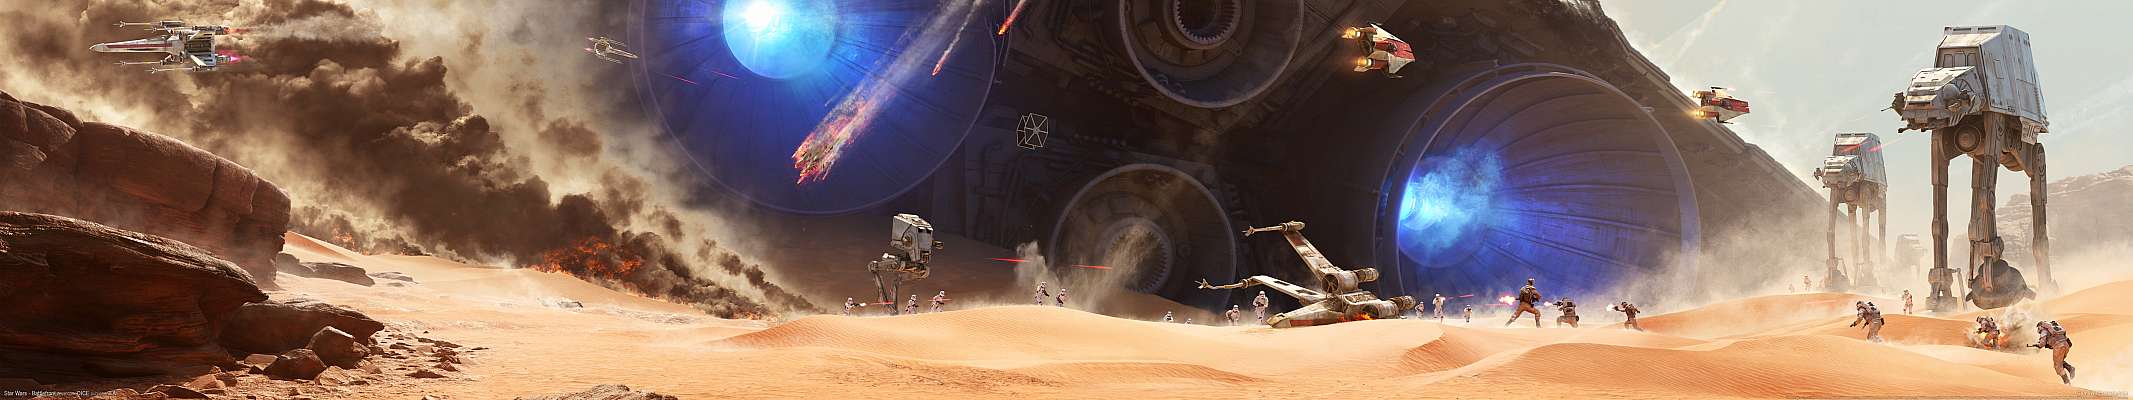 Star Wars - Battlefront triple screen wallpaper or background